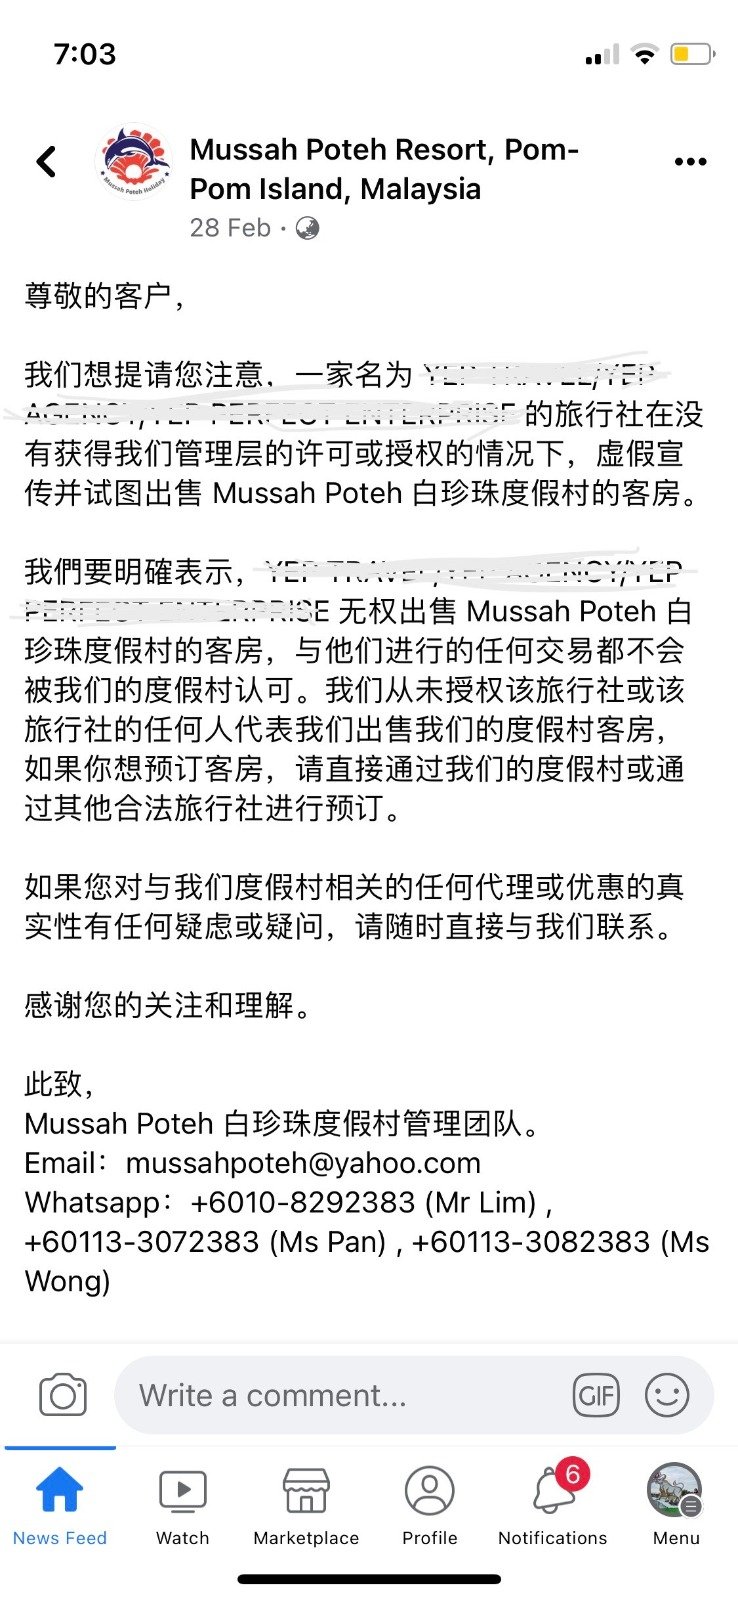 Mussah Poteh白珍珠度假村发表声明，没委任有关公司销售任何旅游配套。